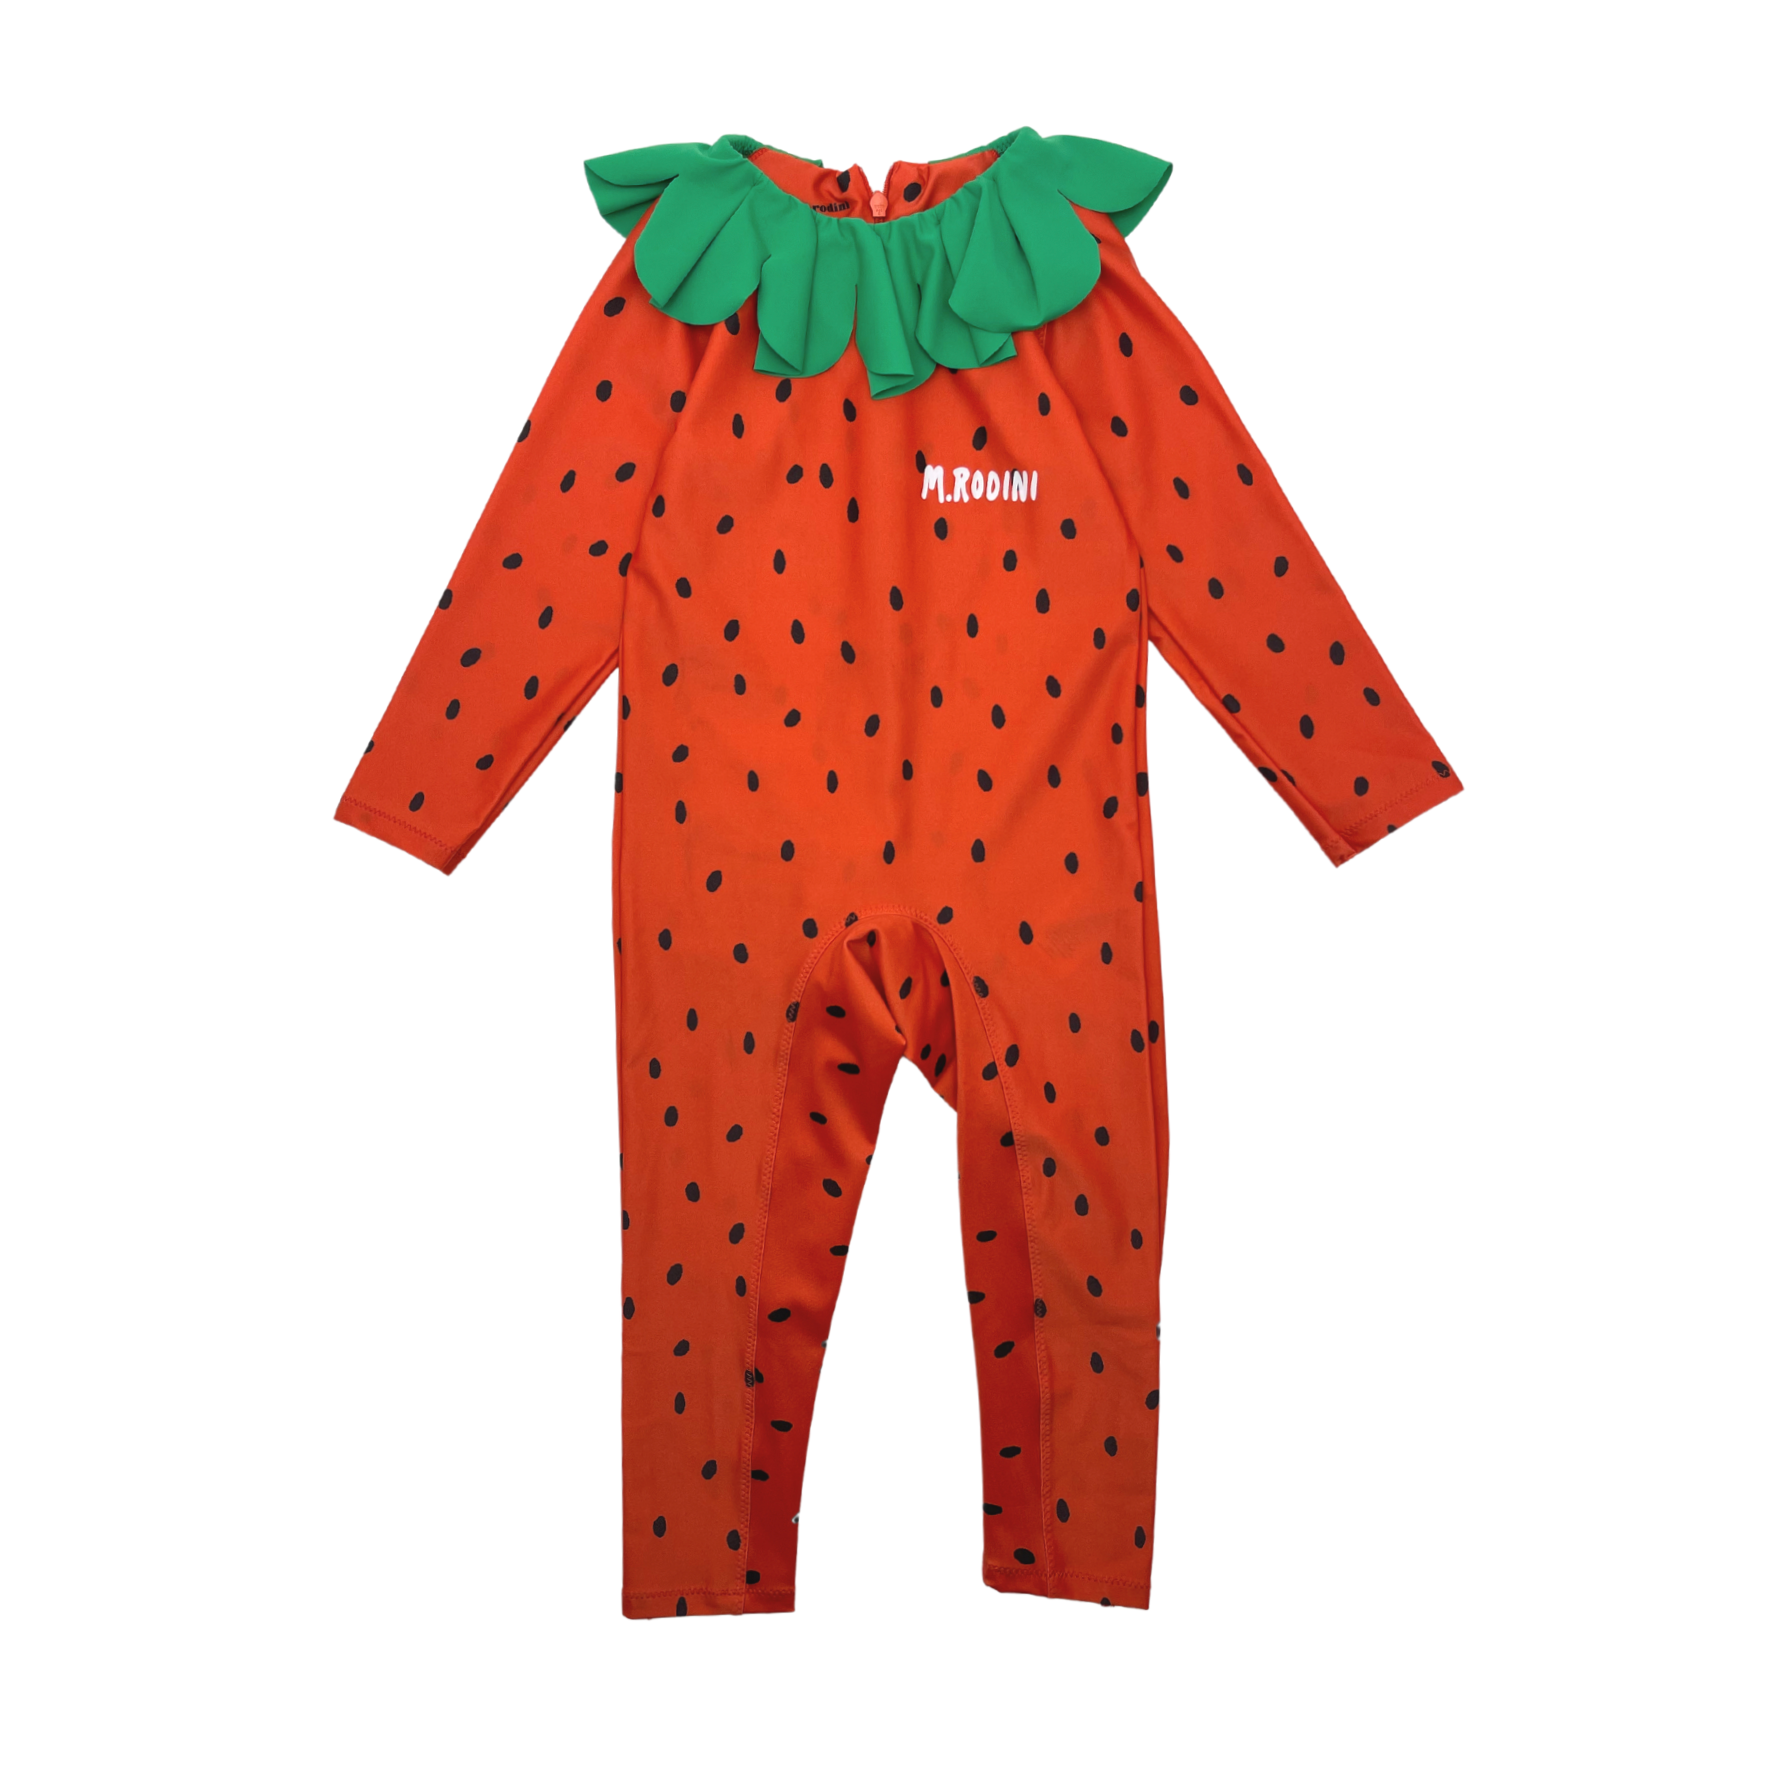 MINI RODINI - Strawberry costume - 18 months/36 months